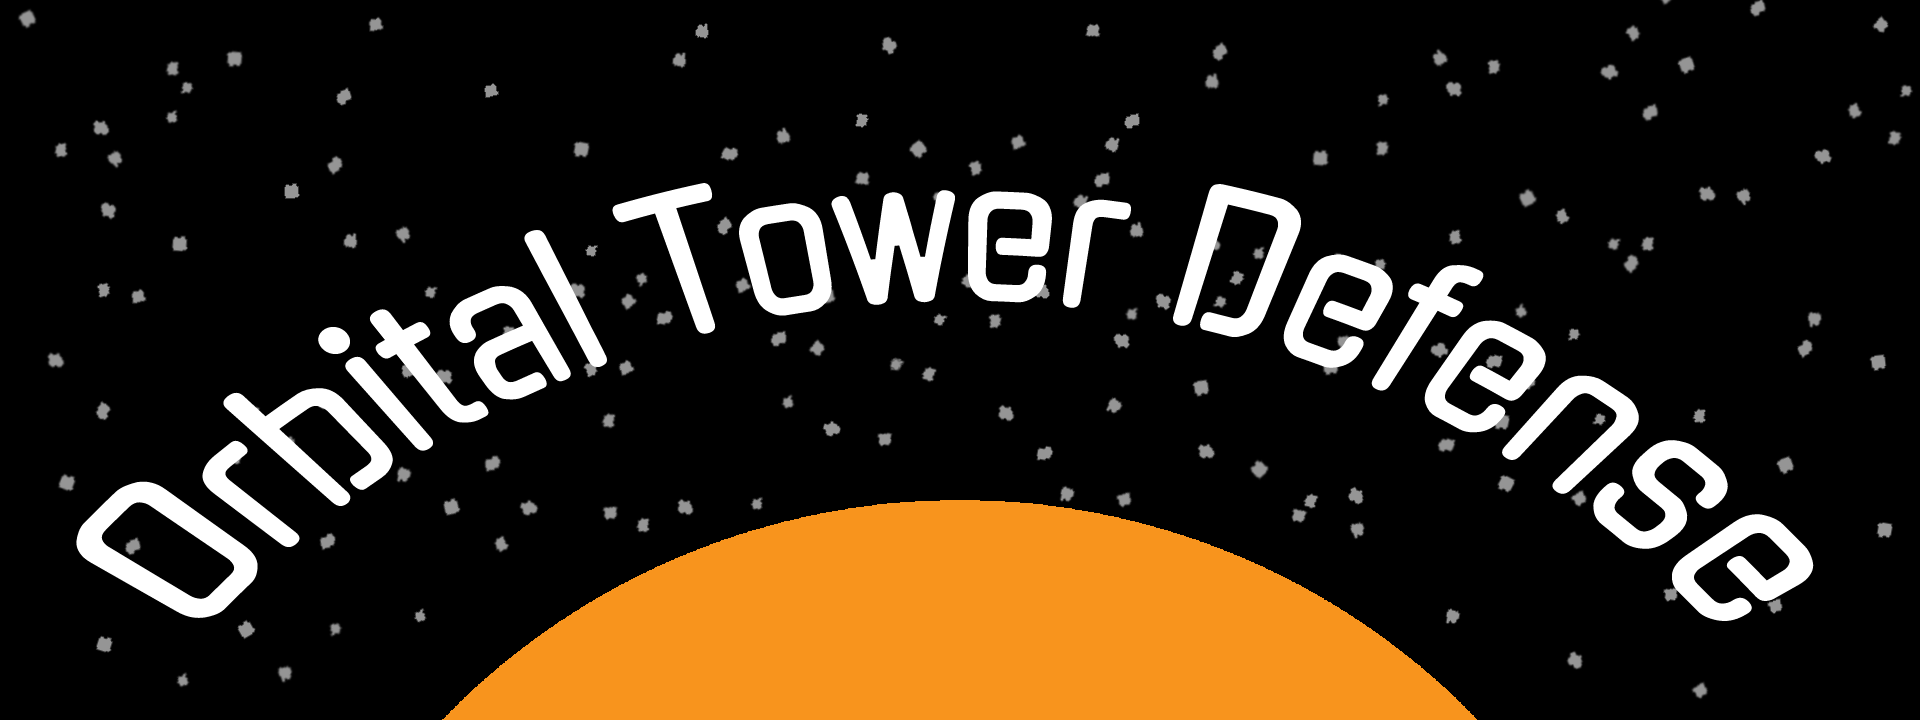 Orbital Tower Defense